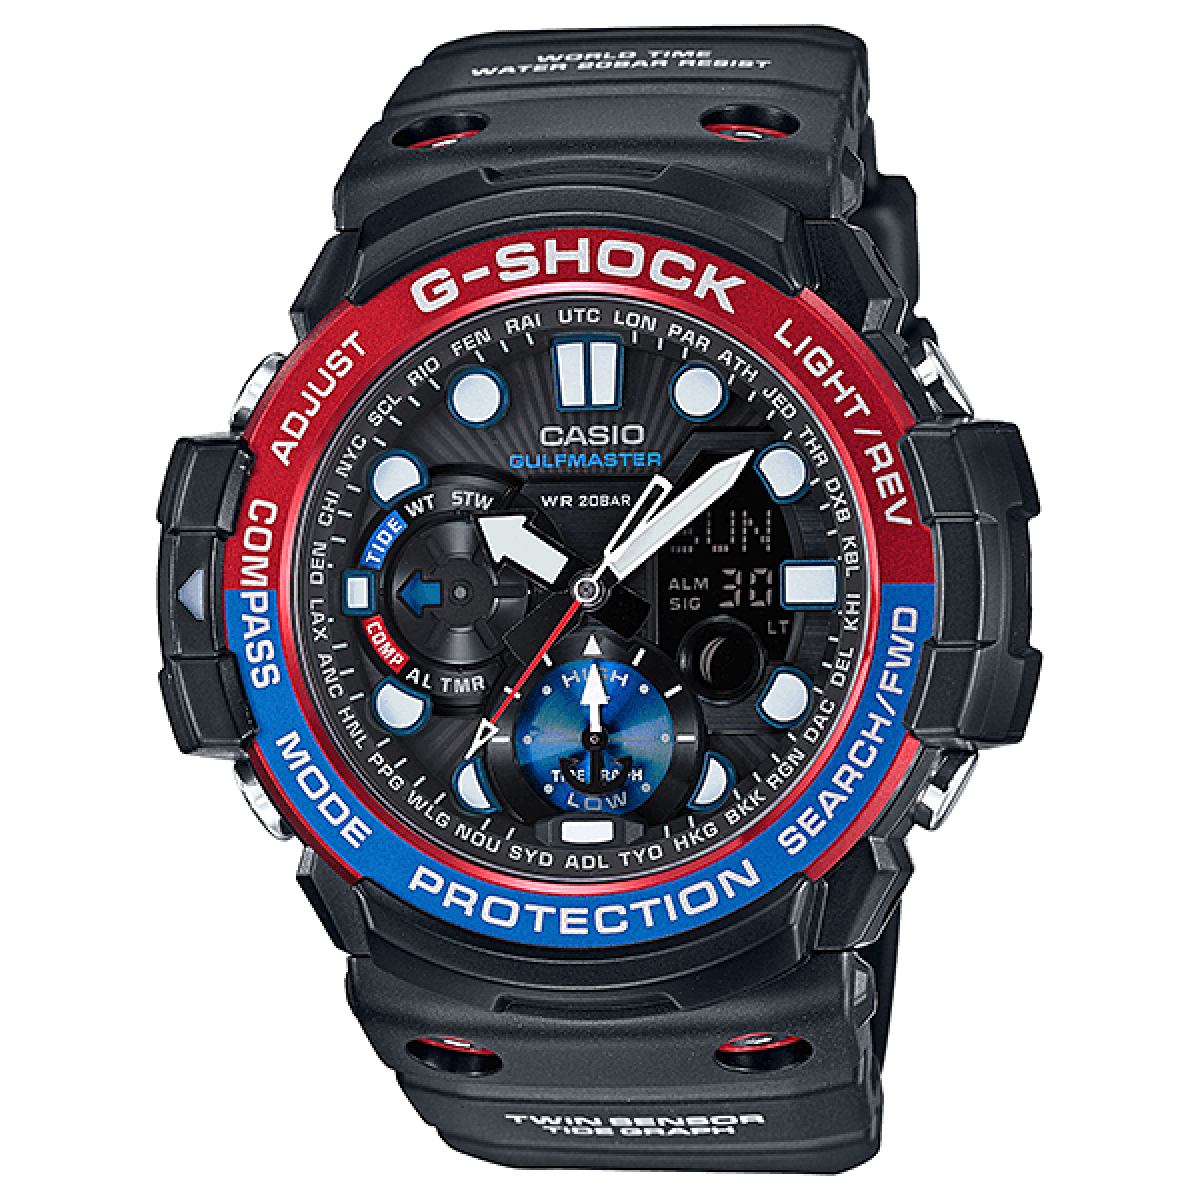 CASIO G SHOCK Watches. The World's Toughest Watches. G SHOCK